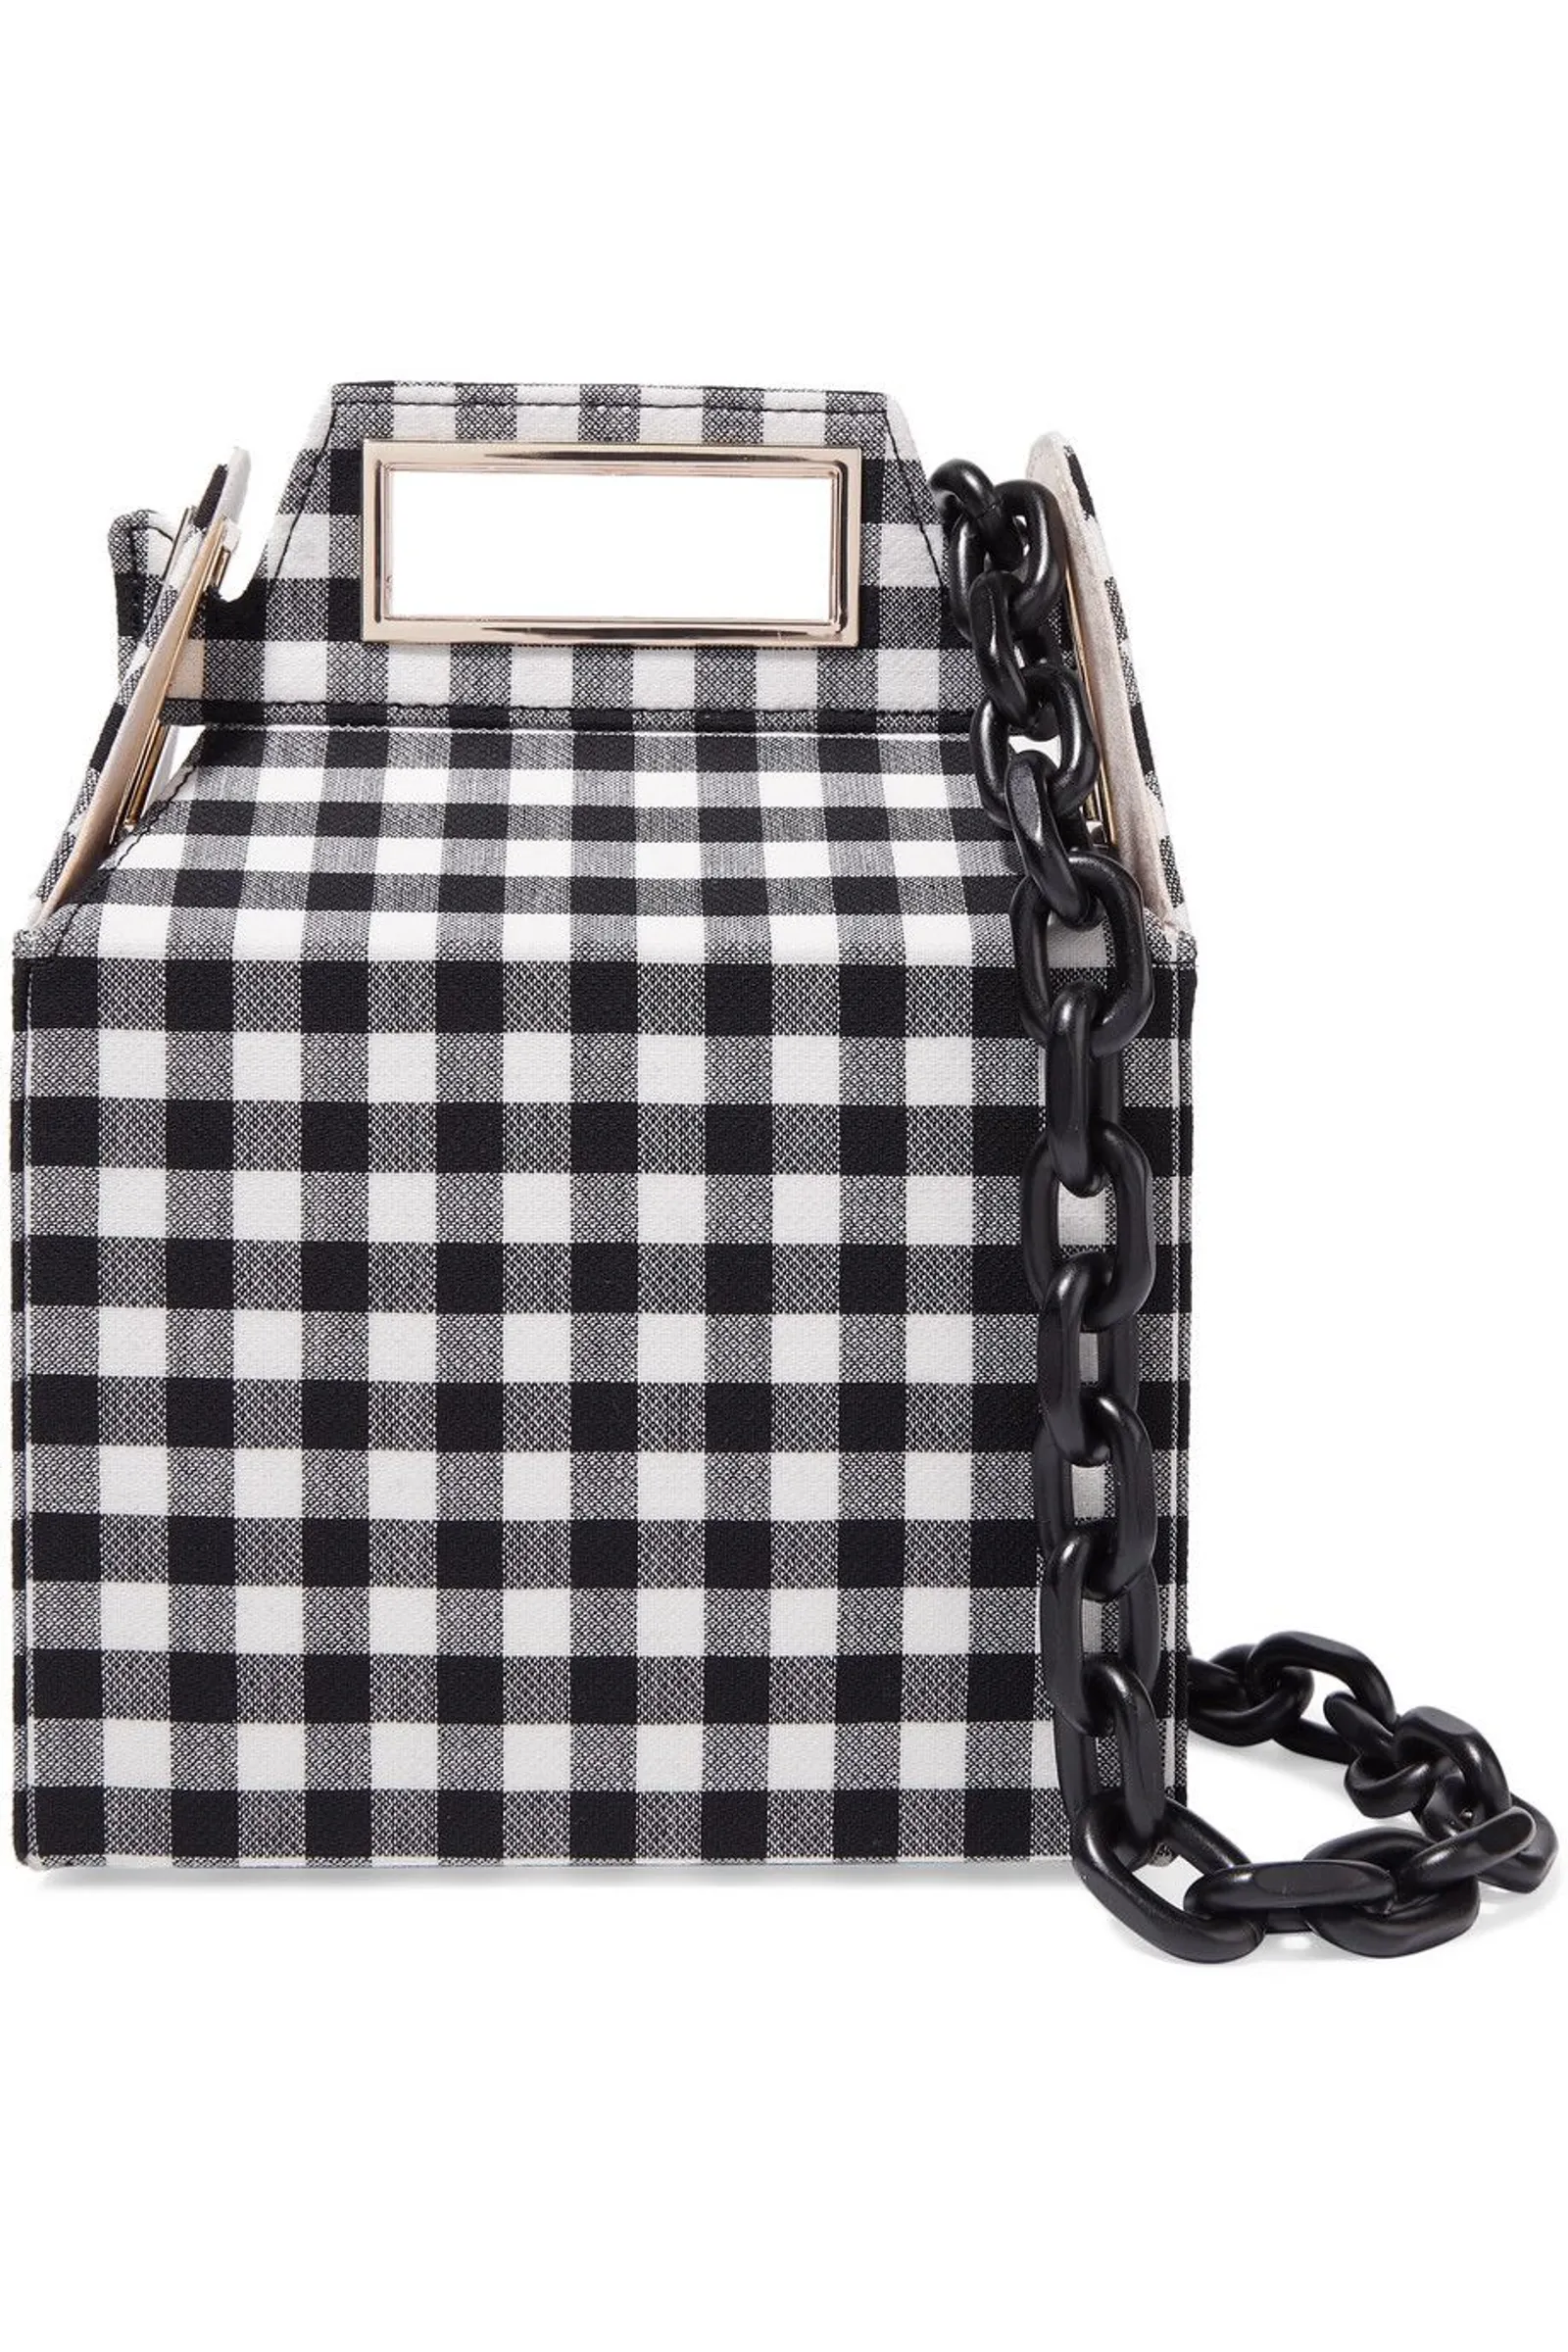 #PopbelaOOTD: Suka Koleksi Tas Lucu? Harus Lihat yang Satu Ini